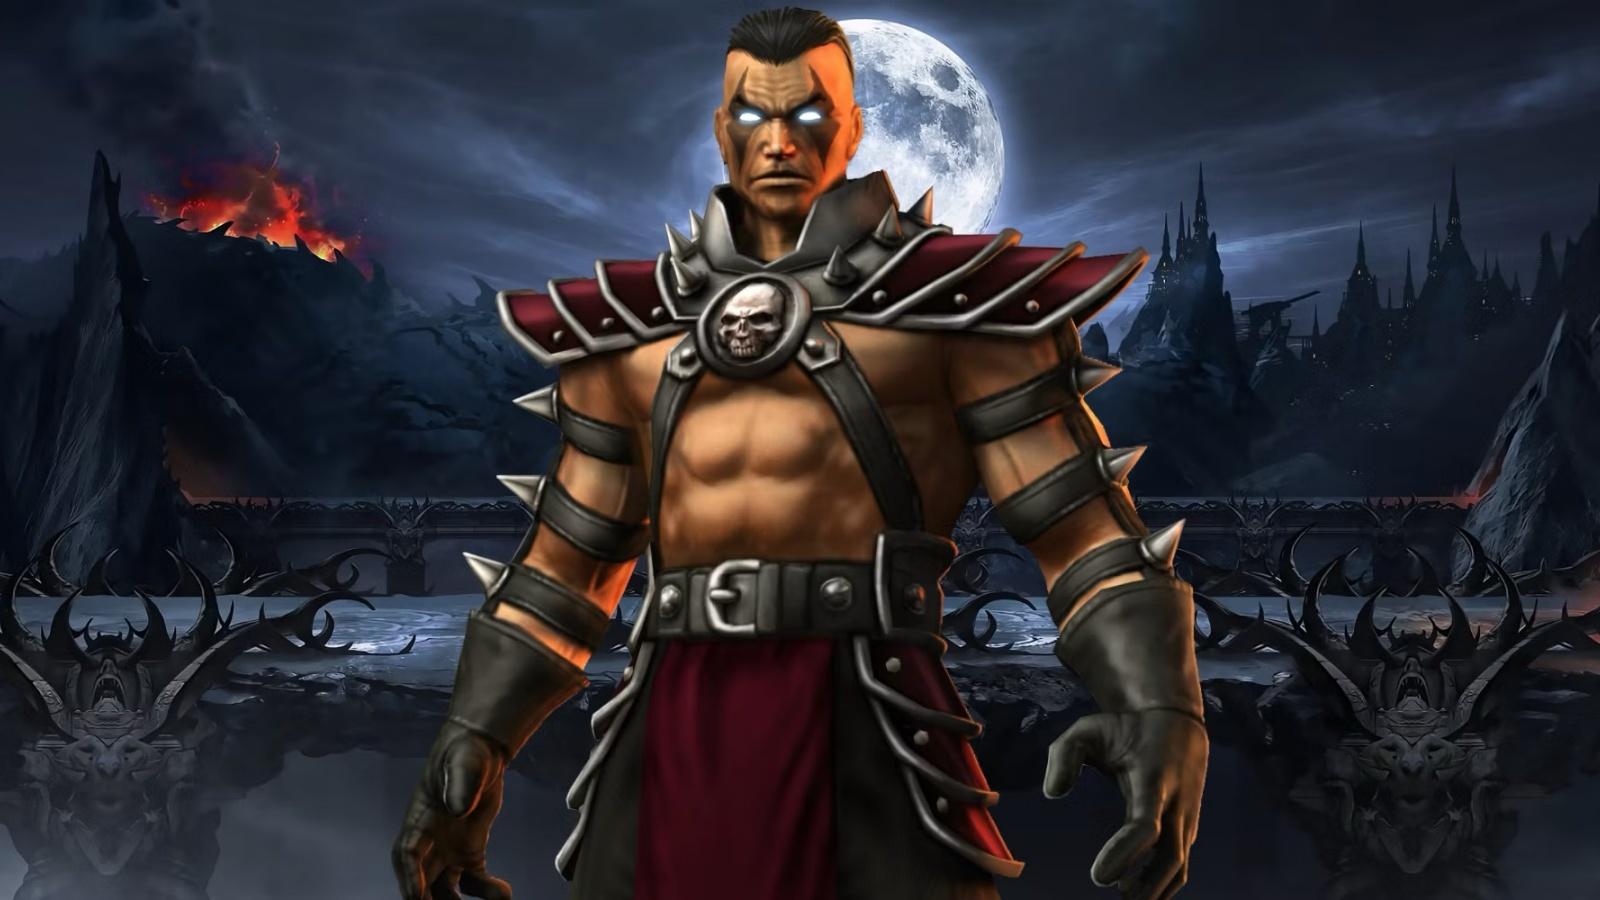 Mortal Kombat 1: Mortal Kombat 1: Here's complete roster of